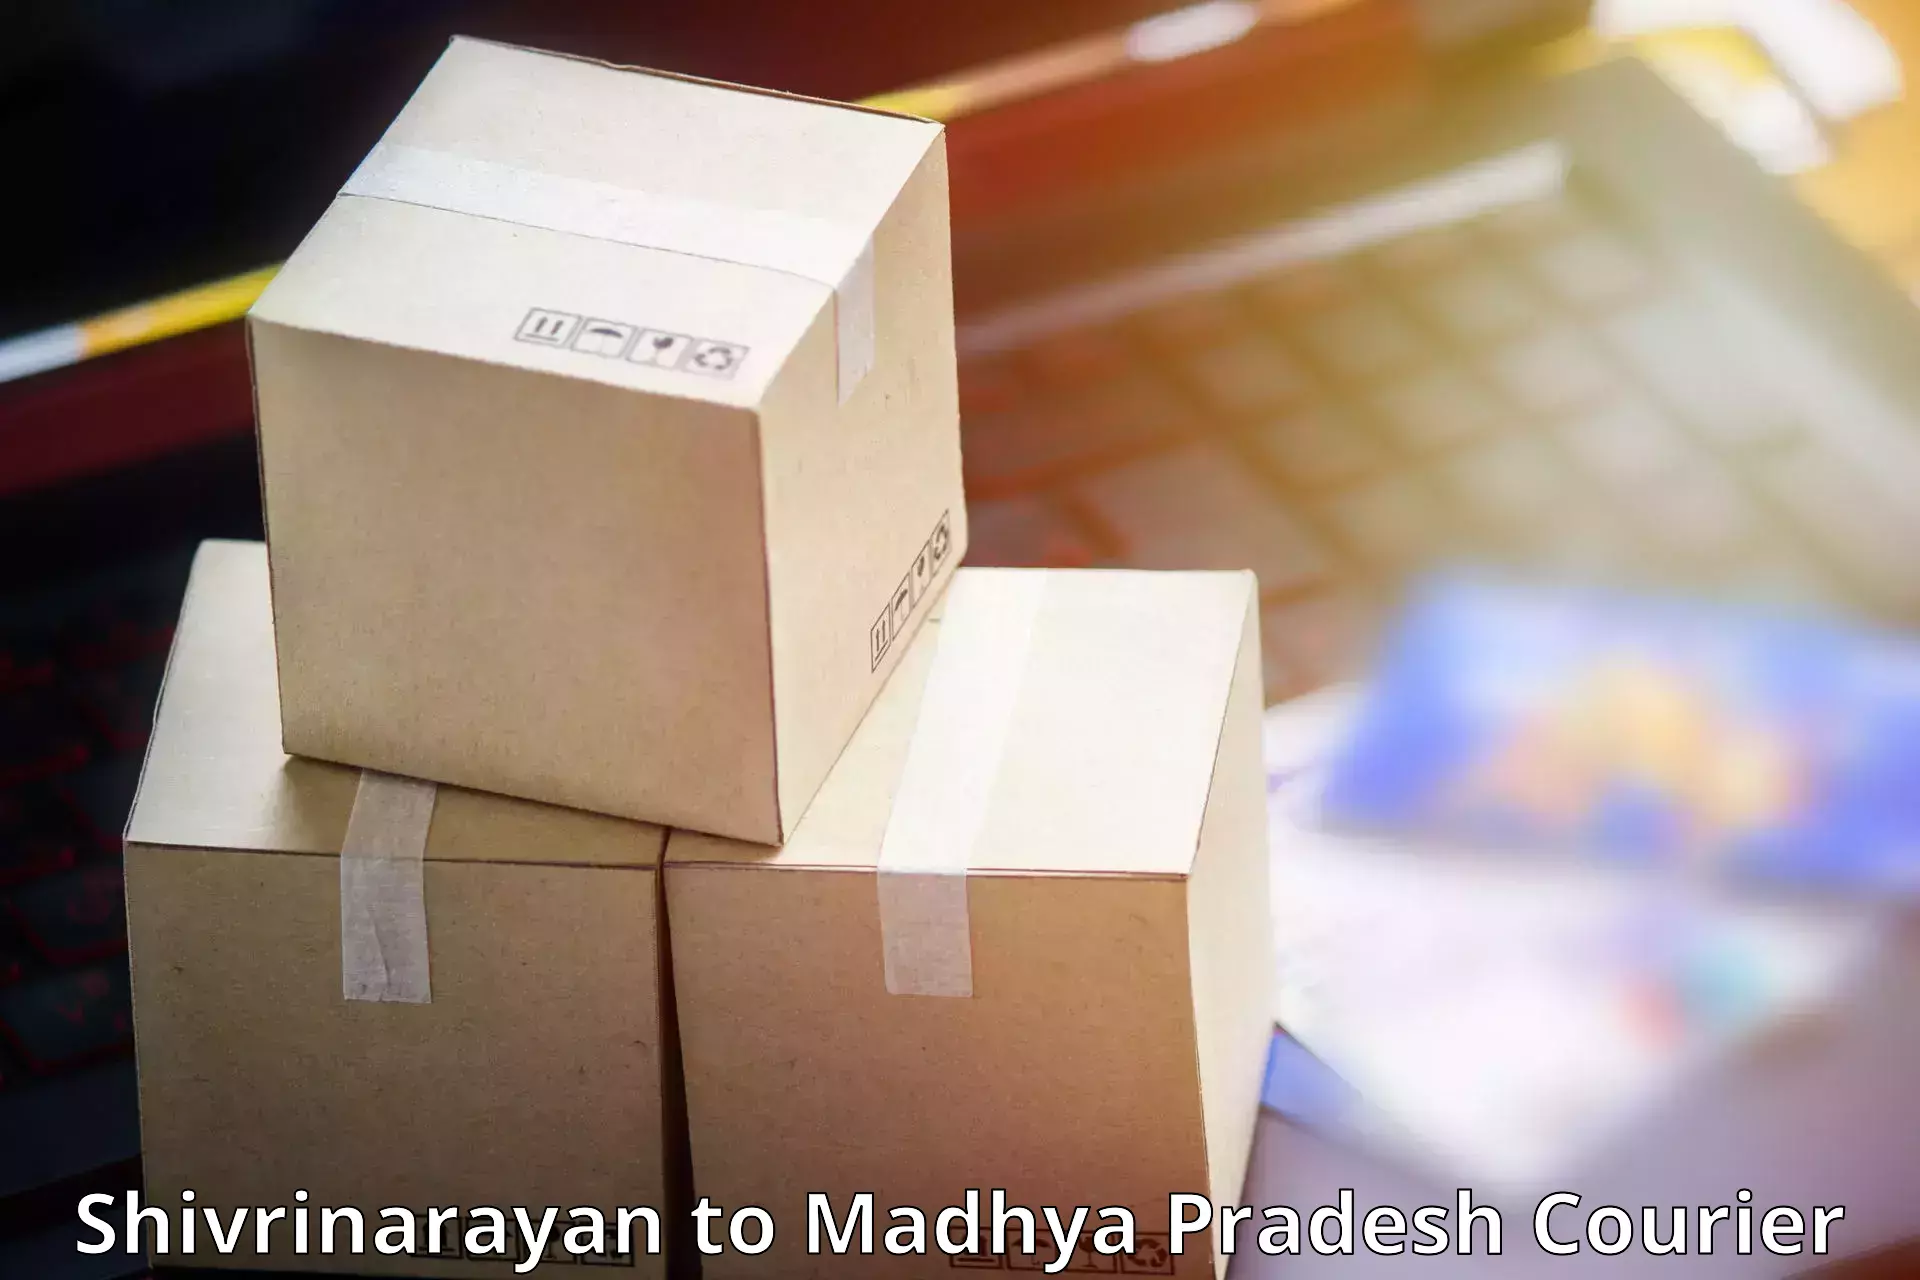 Courier service booking Shivrinarayan to Madhya Pradesh